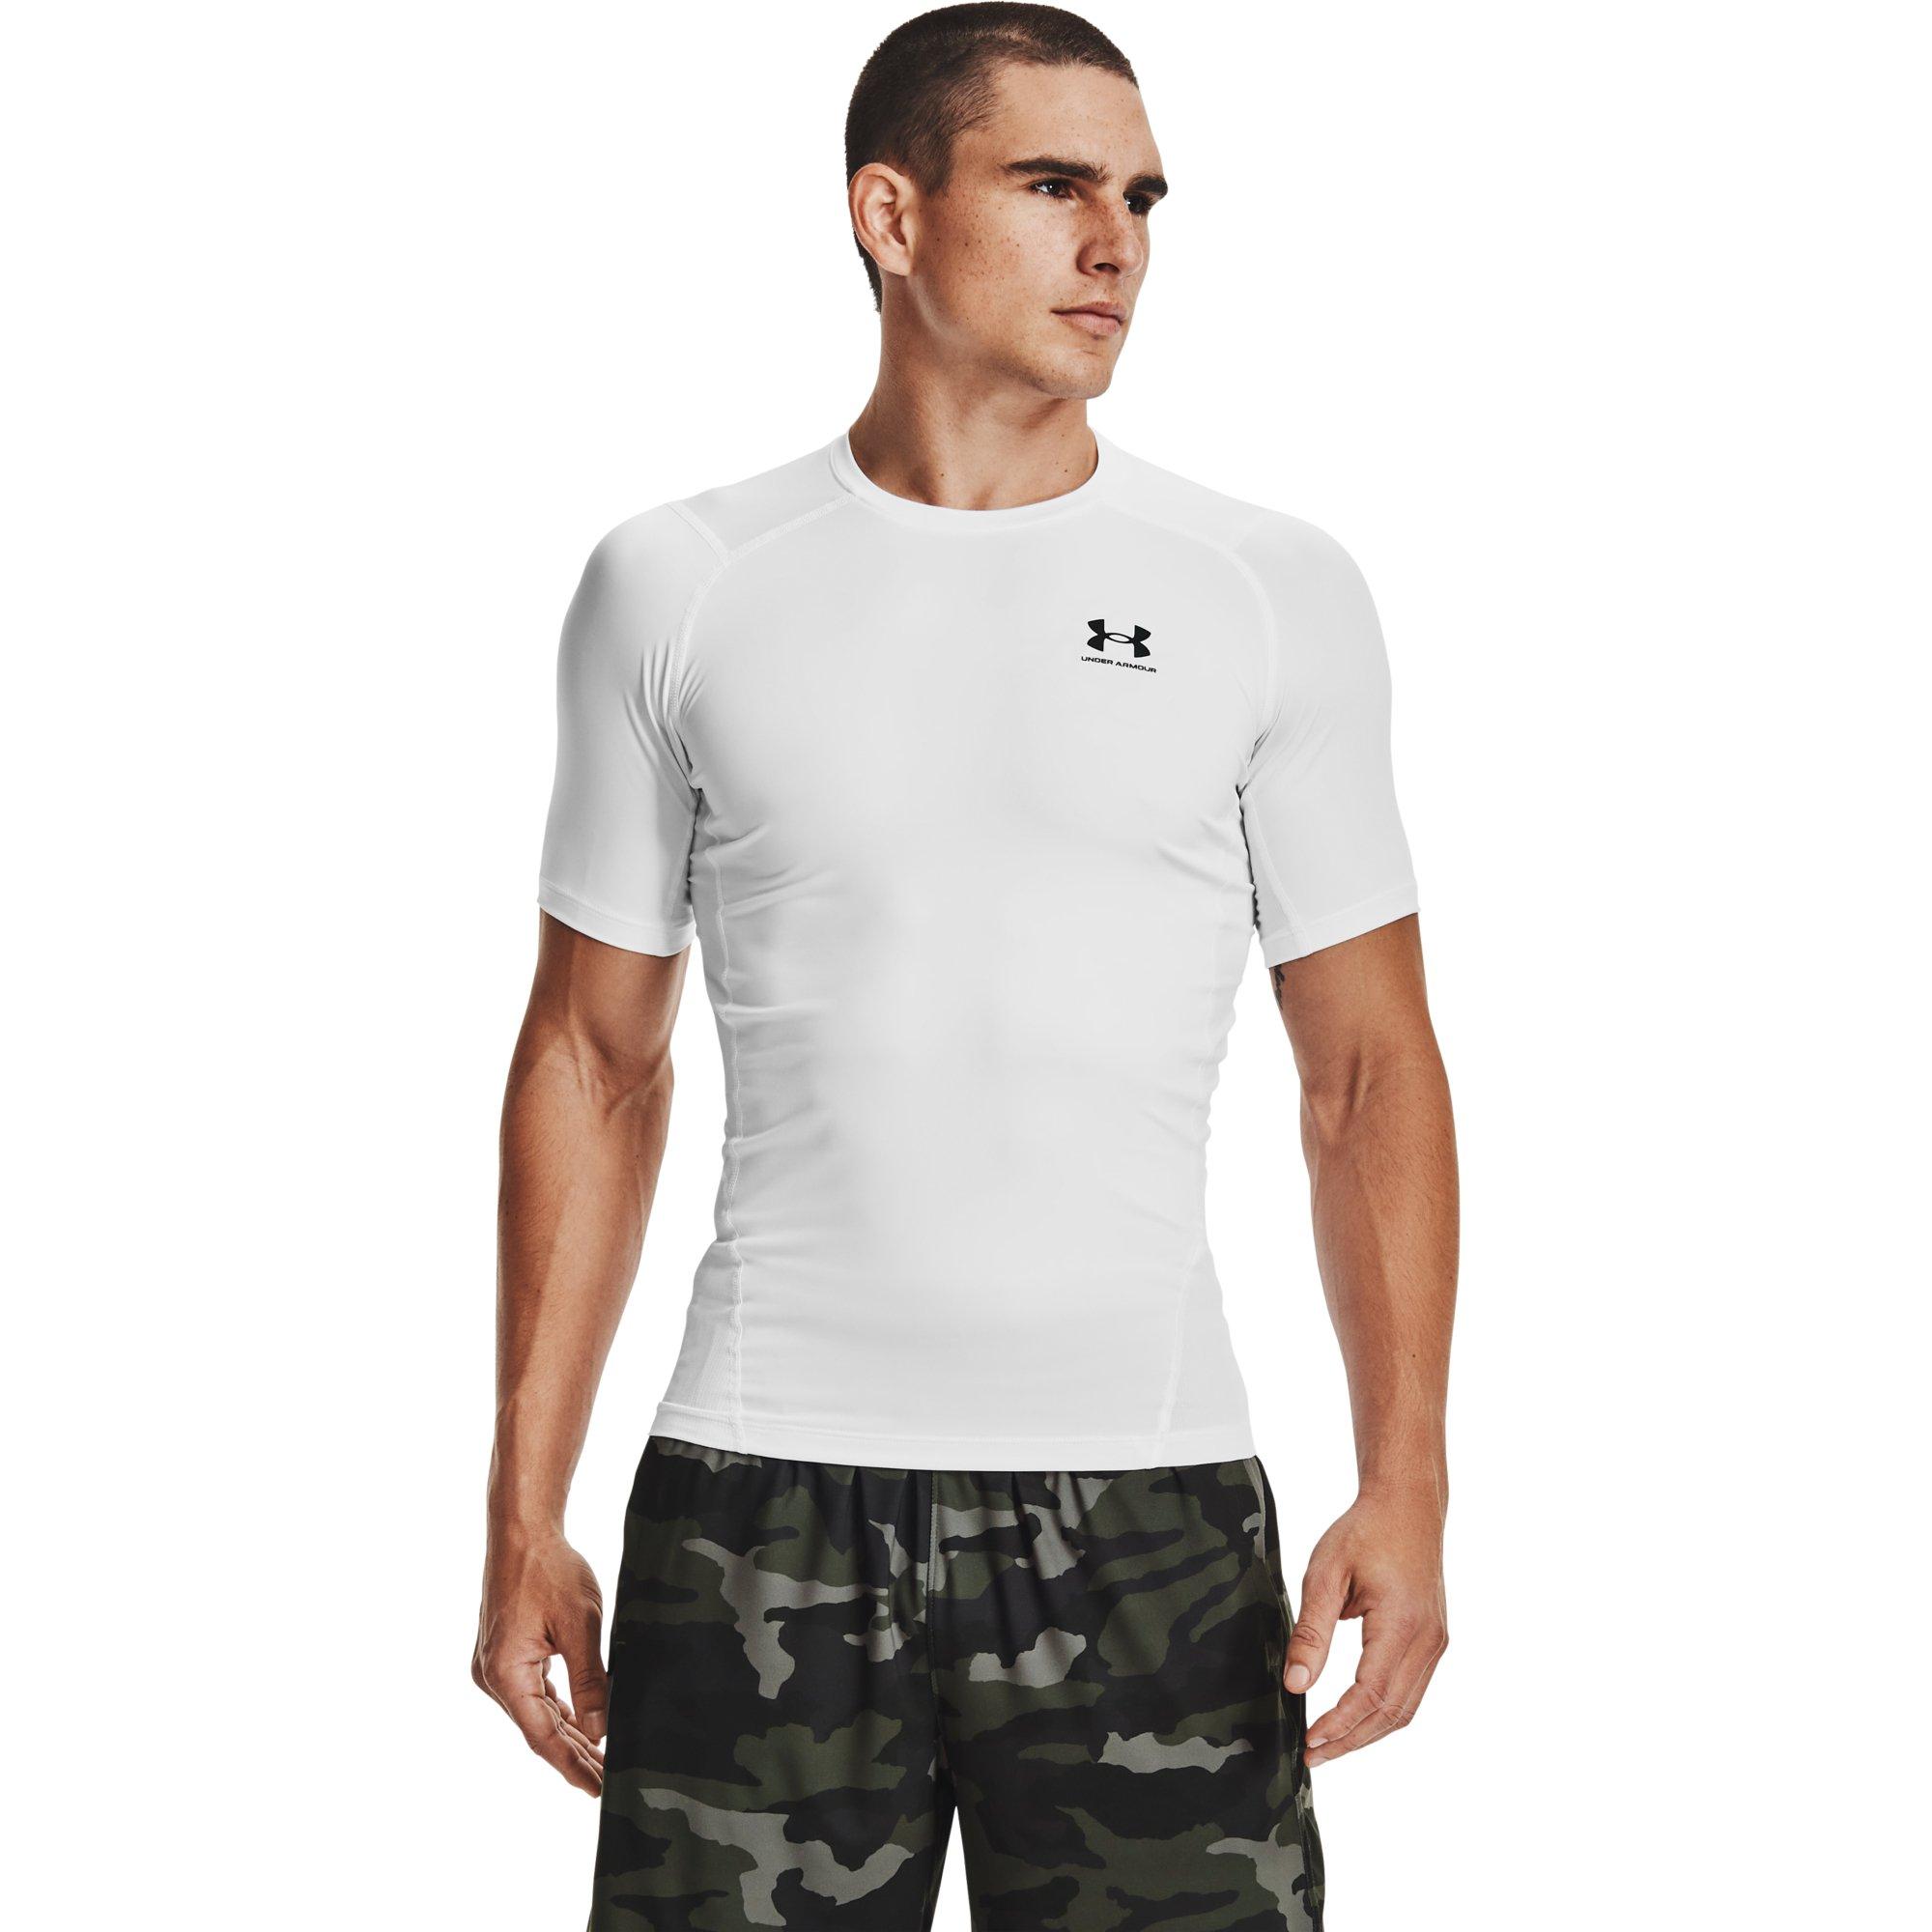 Men's UA HeatGear Armour Compression Shirt Long Sleeve - Forest  Green/White, XXXL 